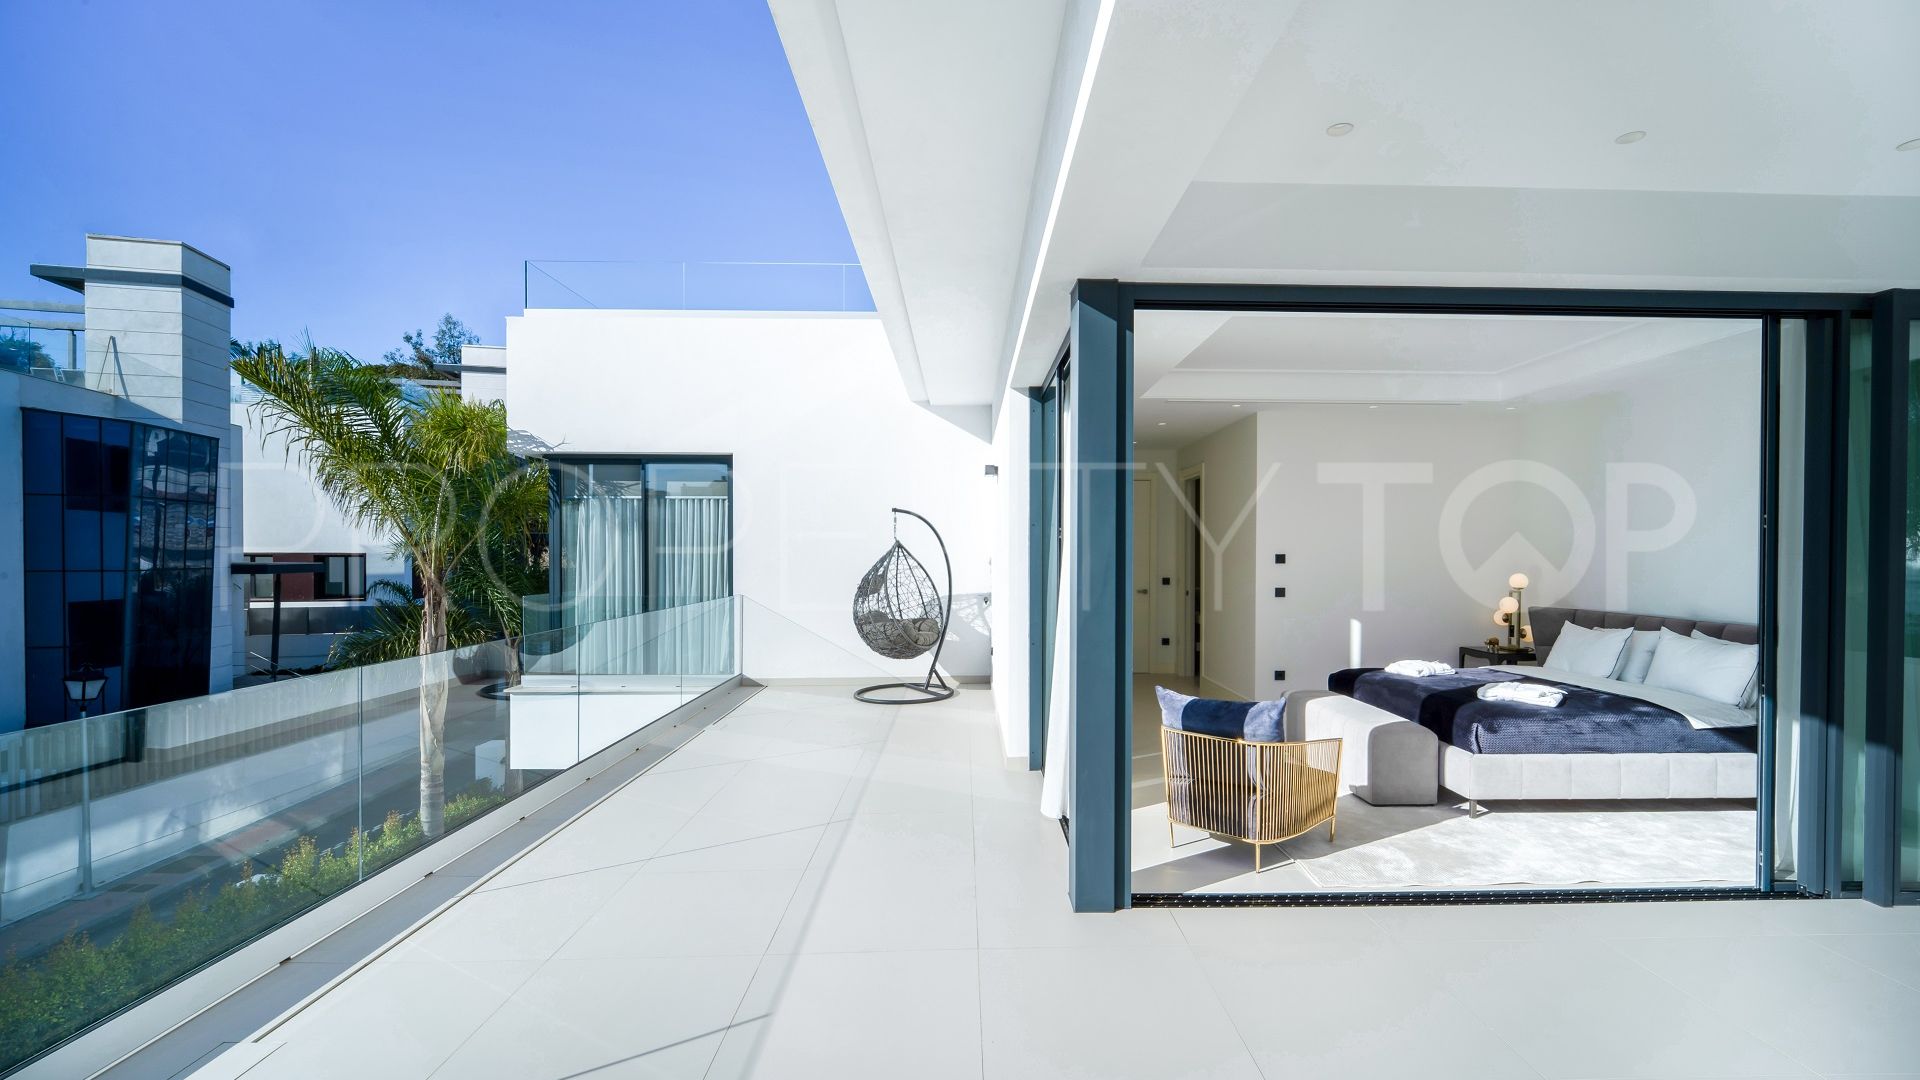 4 bedrooms house in Rio Verde Playa for sale